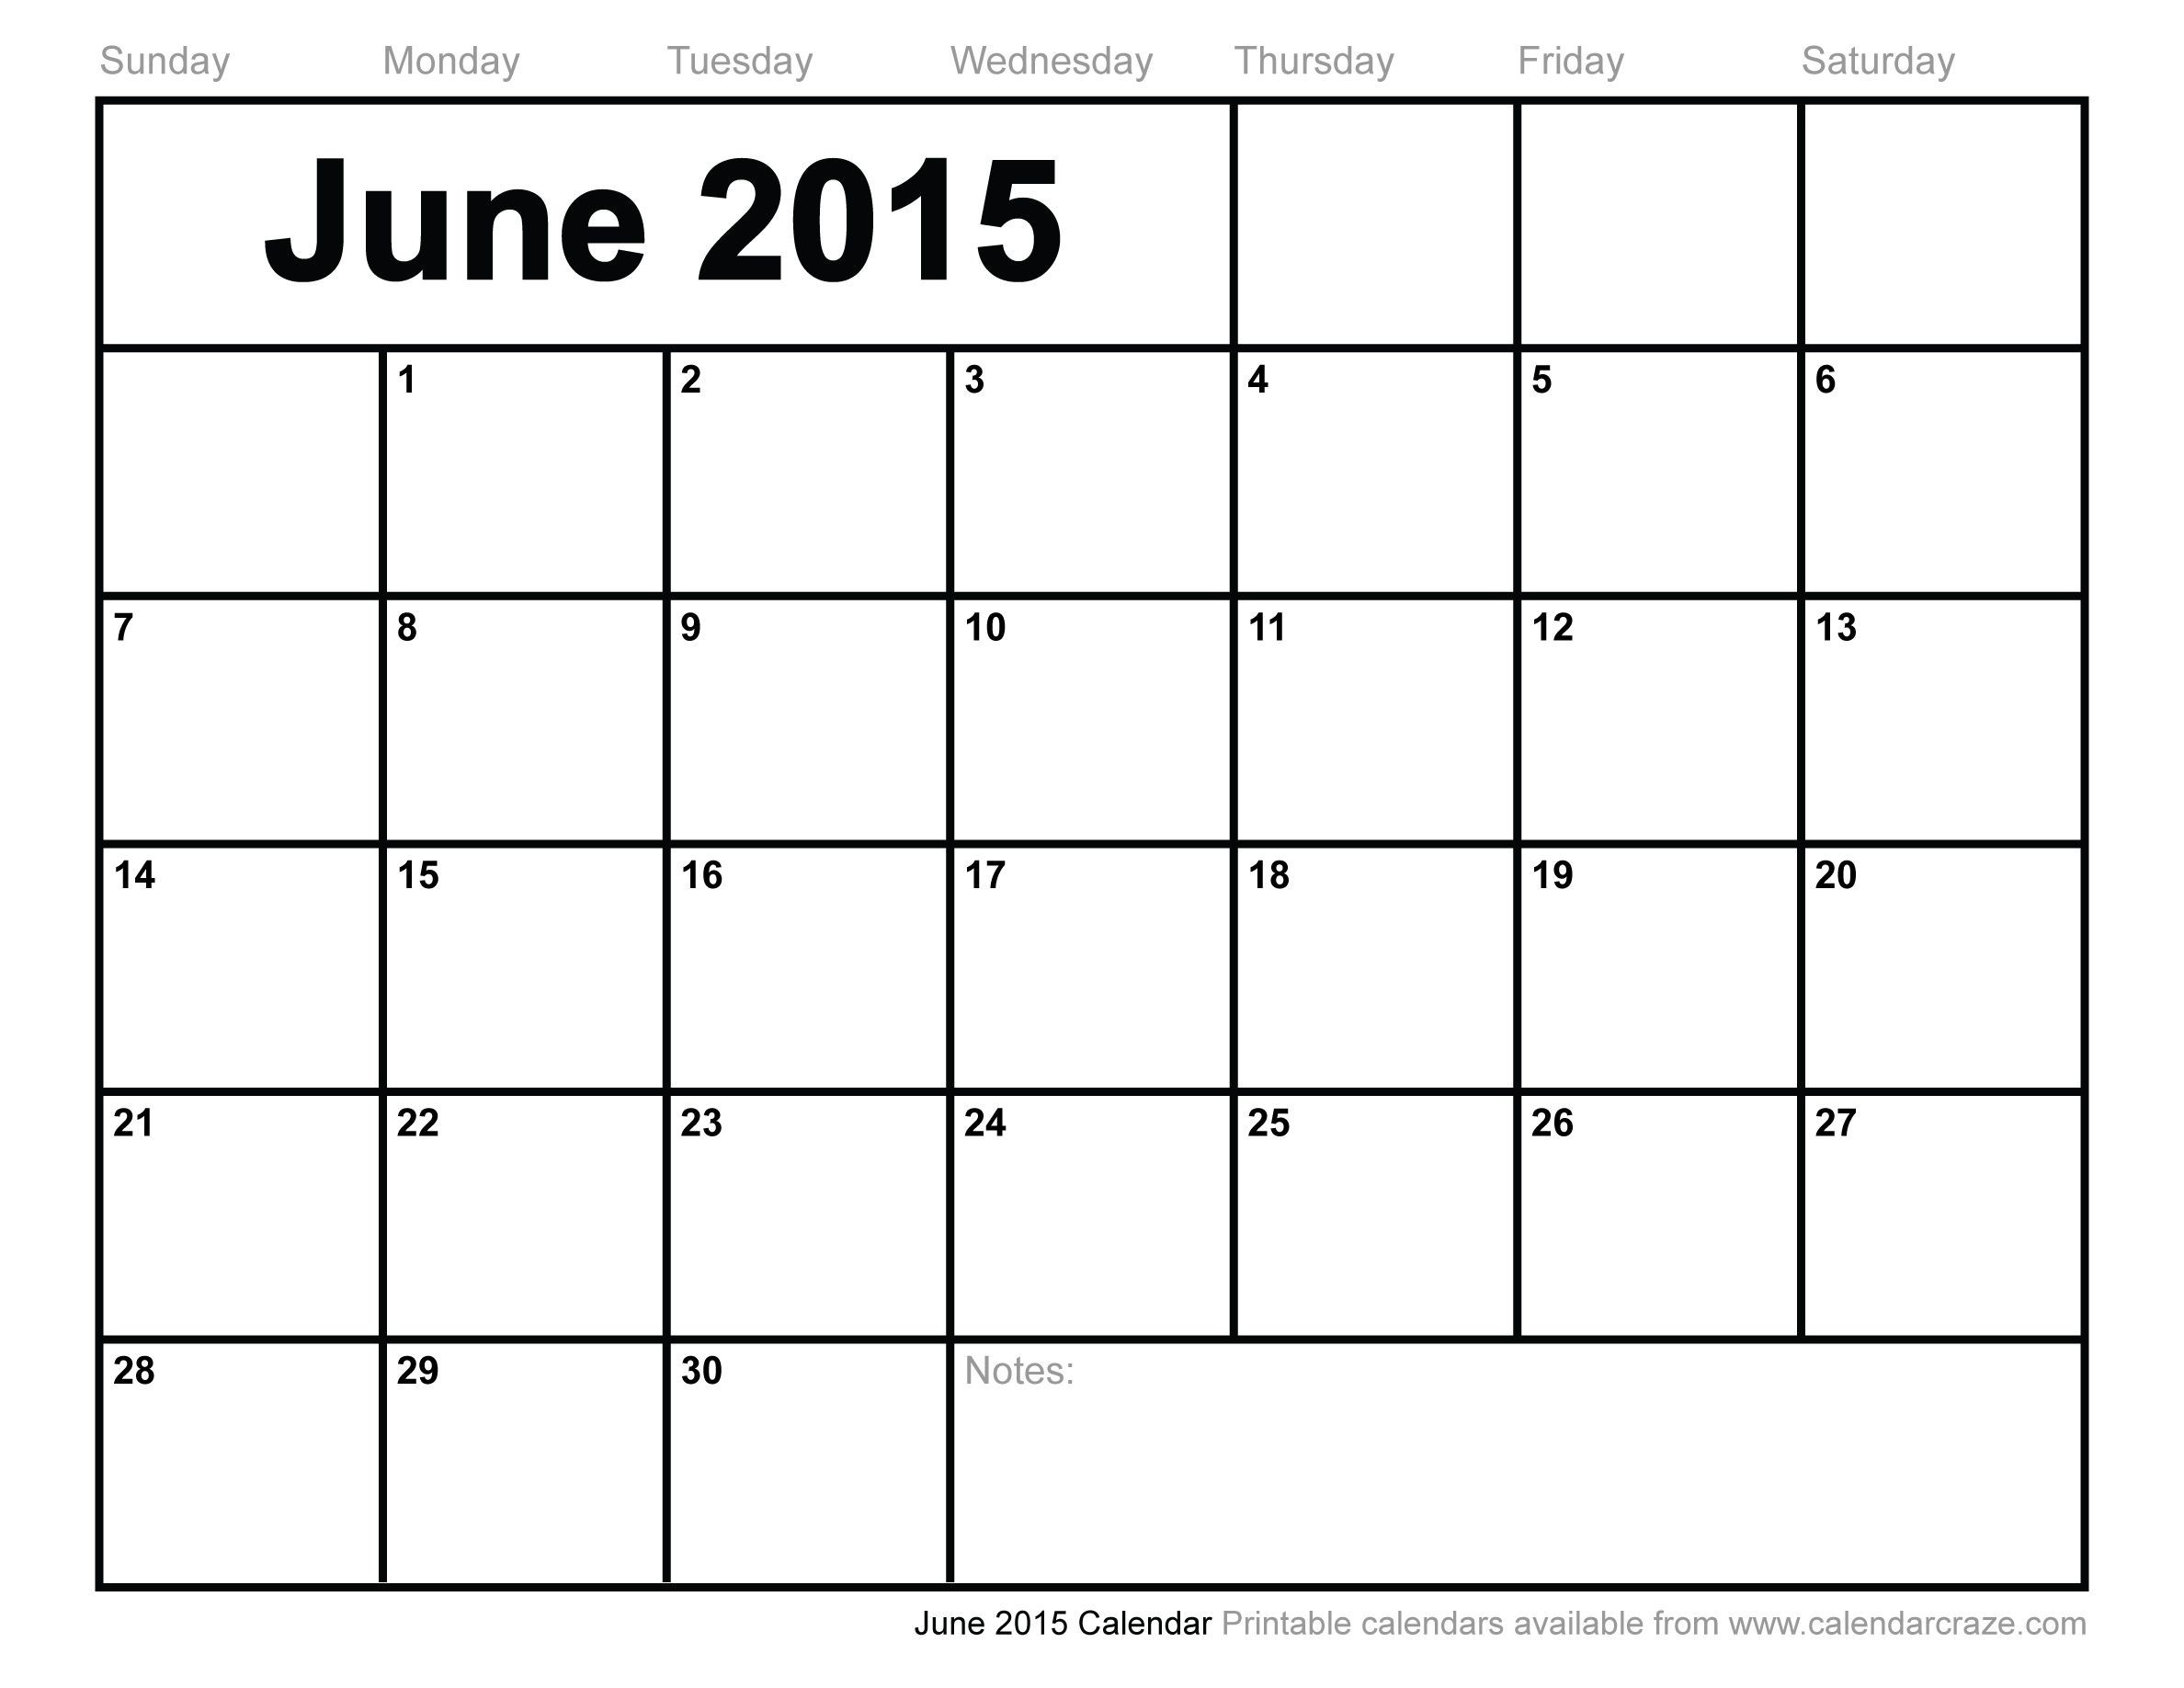 Blank Monthly Calendar Sun-Sat Printable For Free Of Cost-Sun - Sat Monthly Calendar